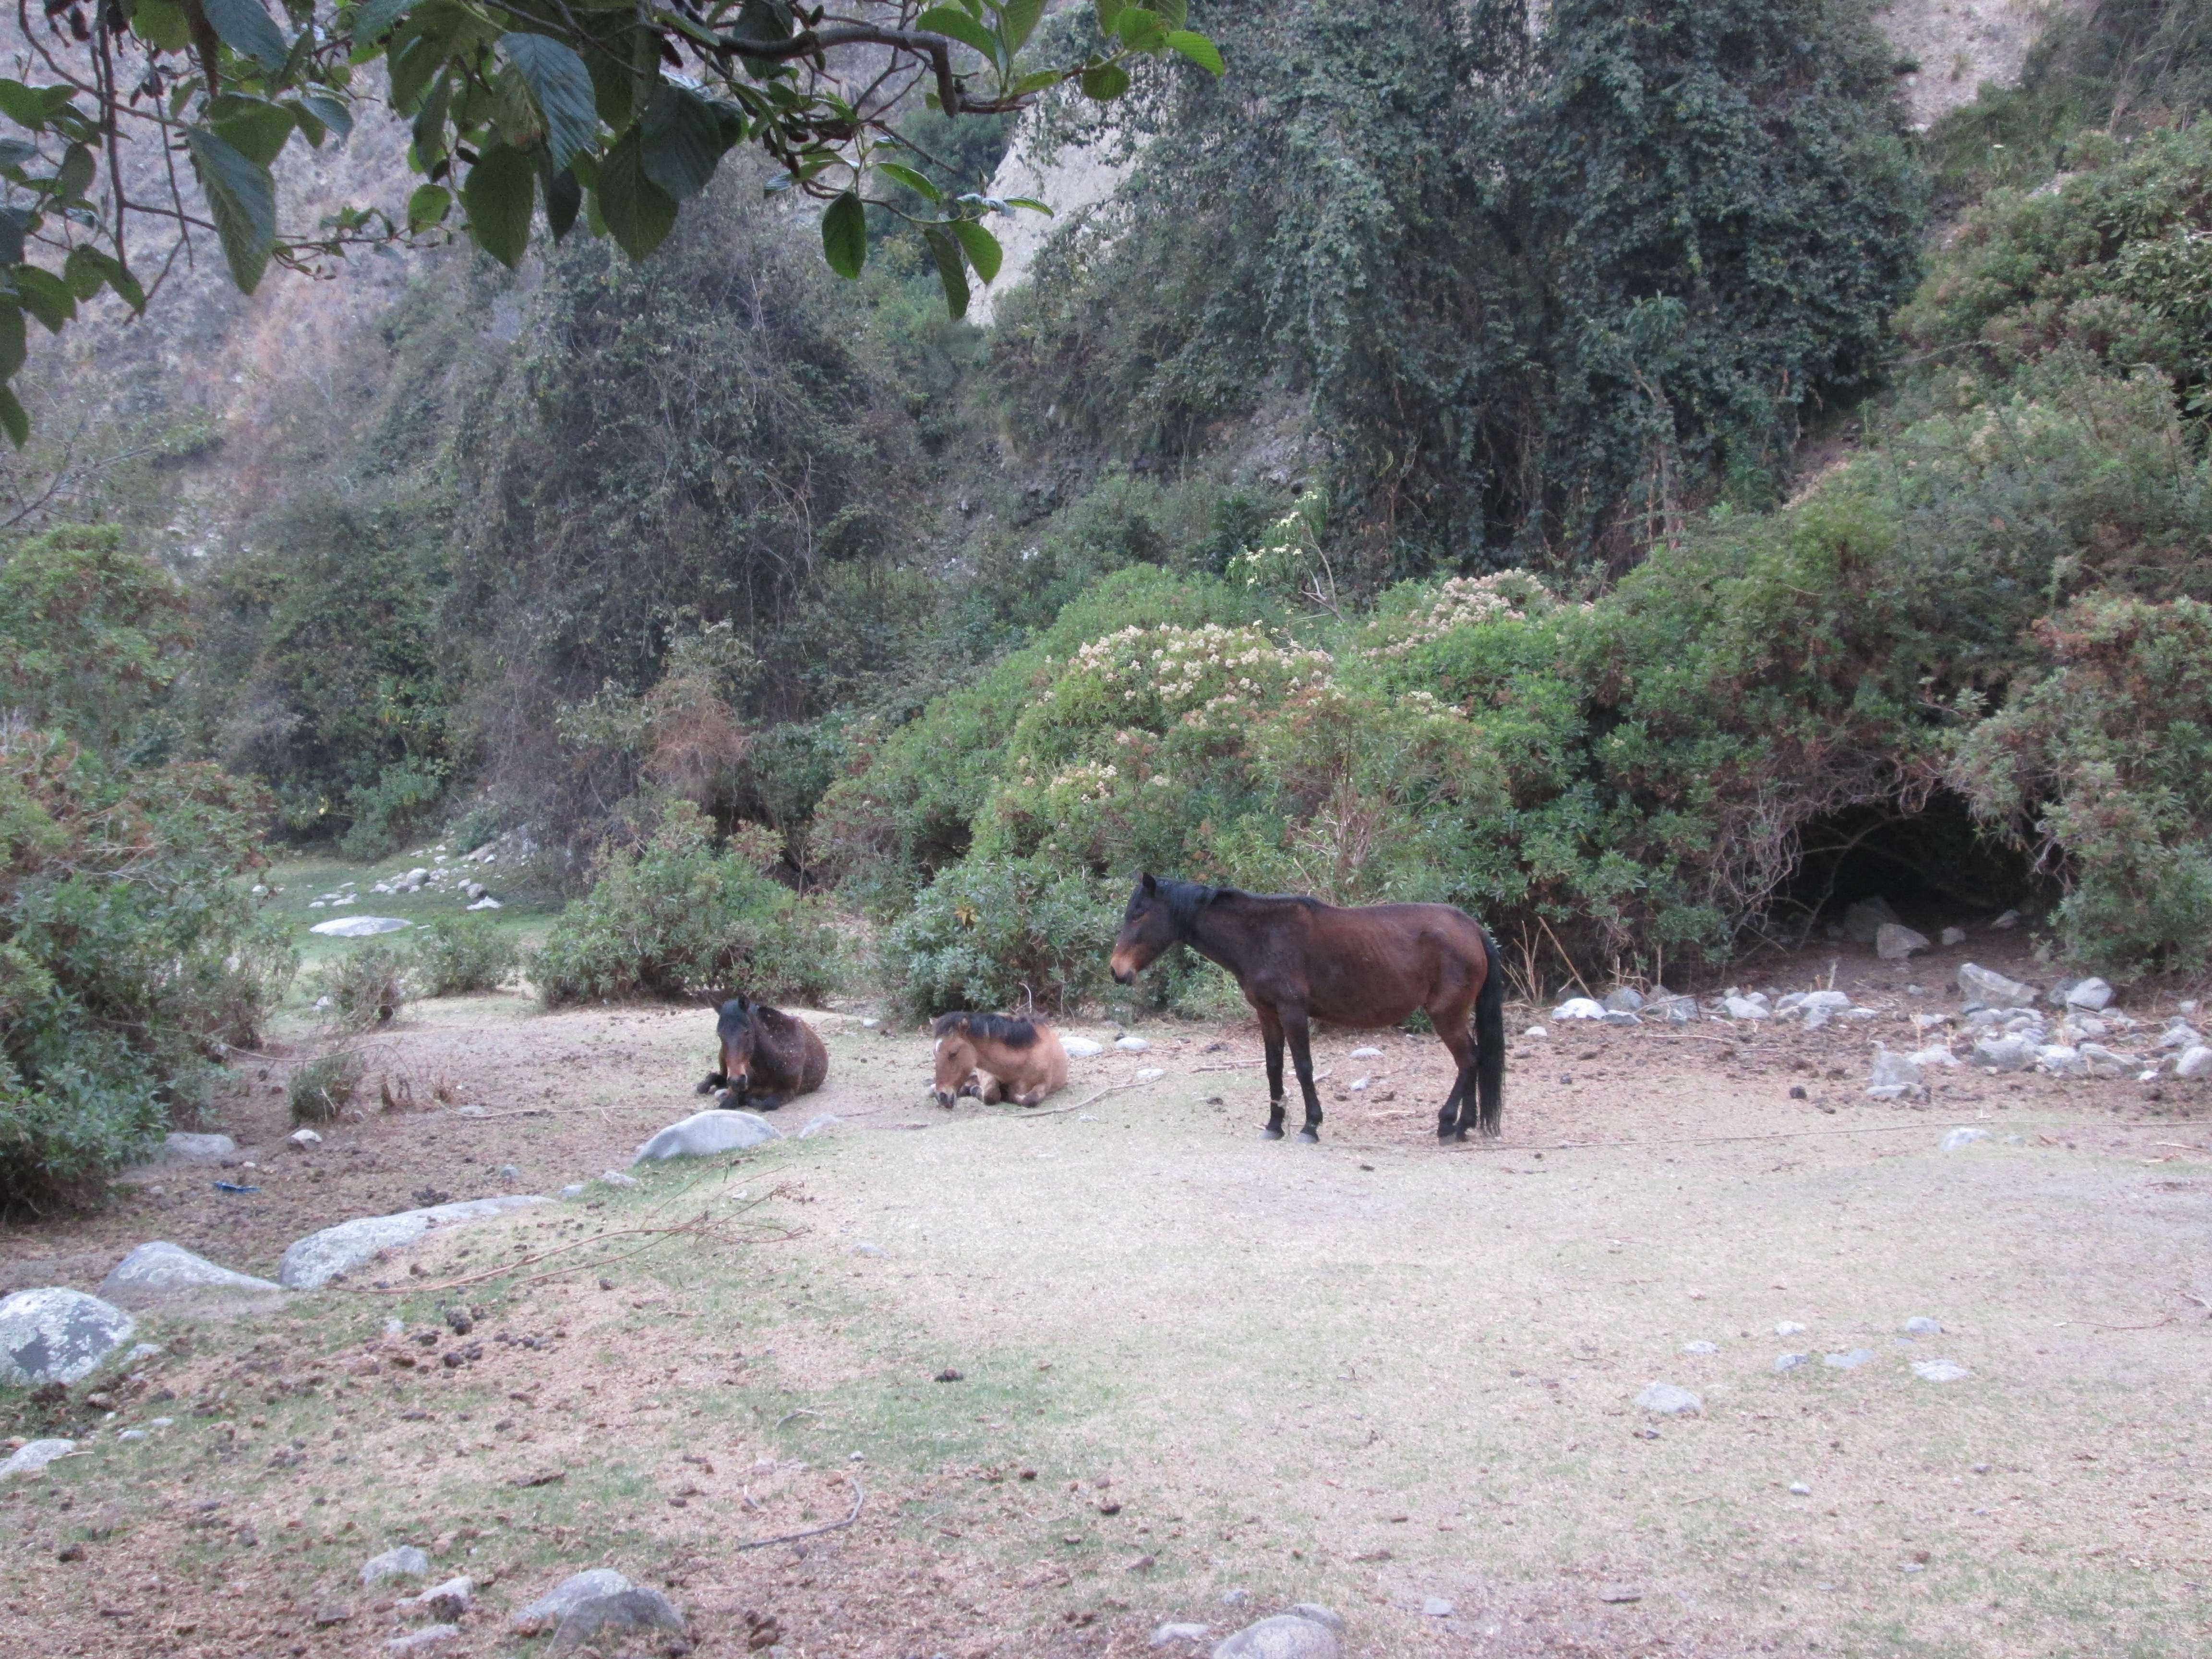 Some horses near my campsite